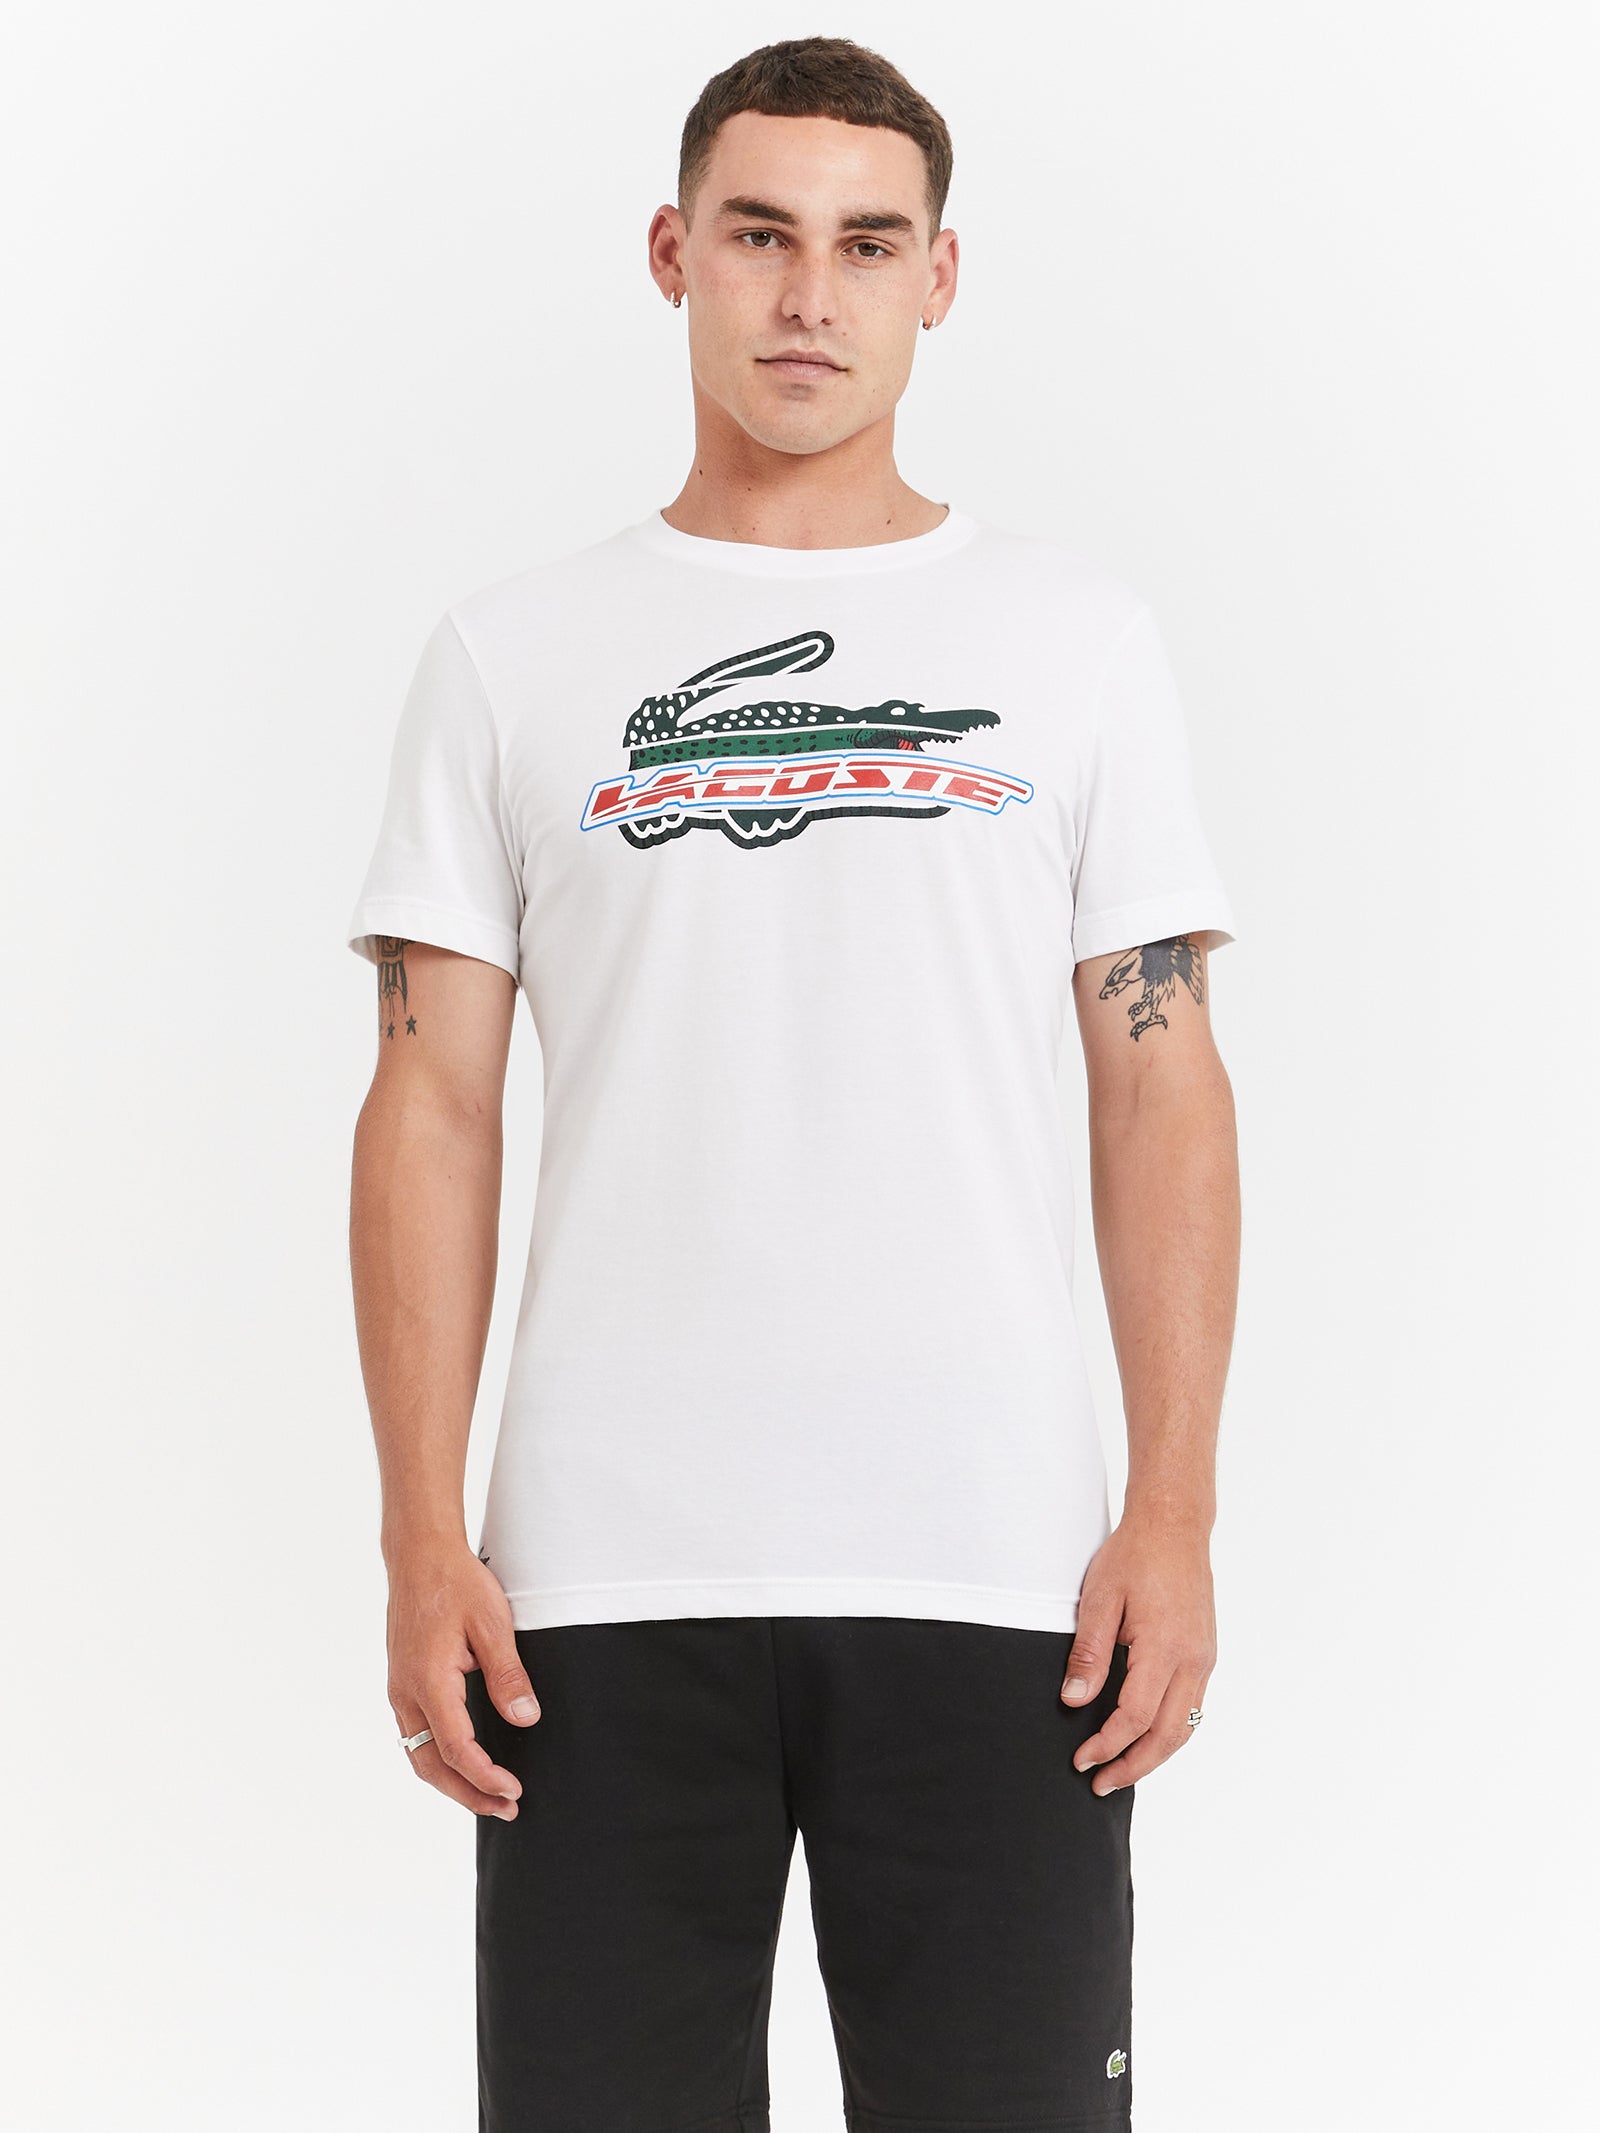 Logo Croc Tech Jersey T-Shirt in White - Glue Store